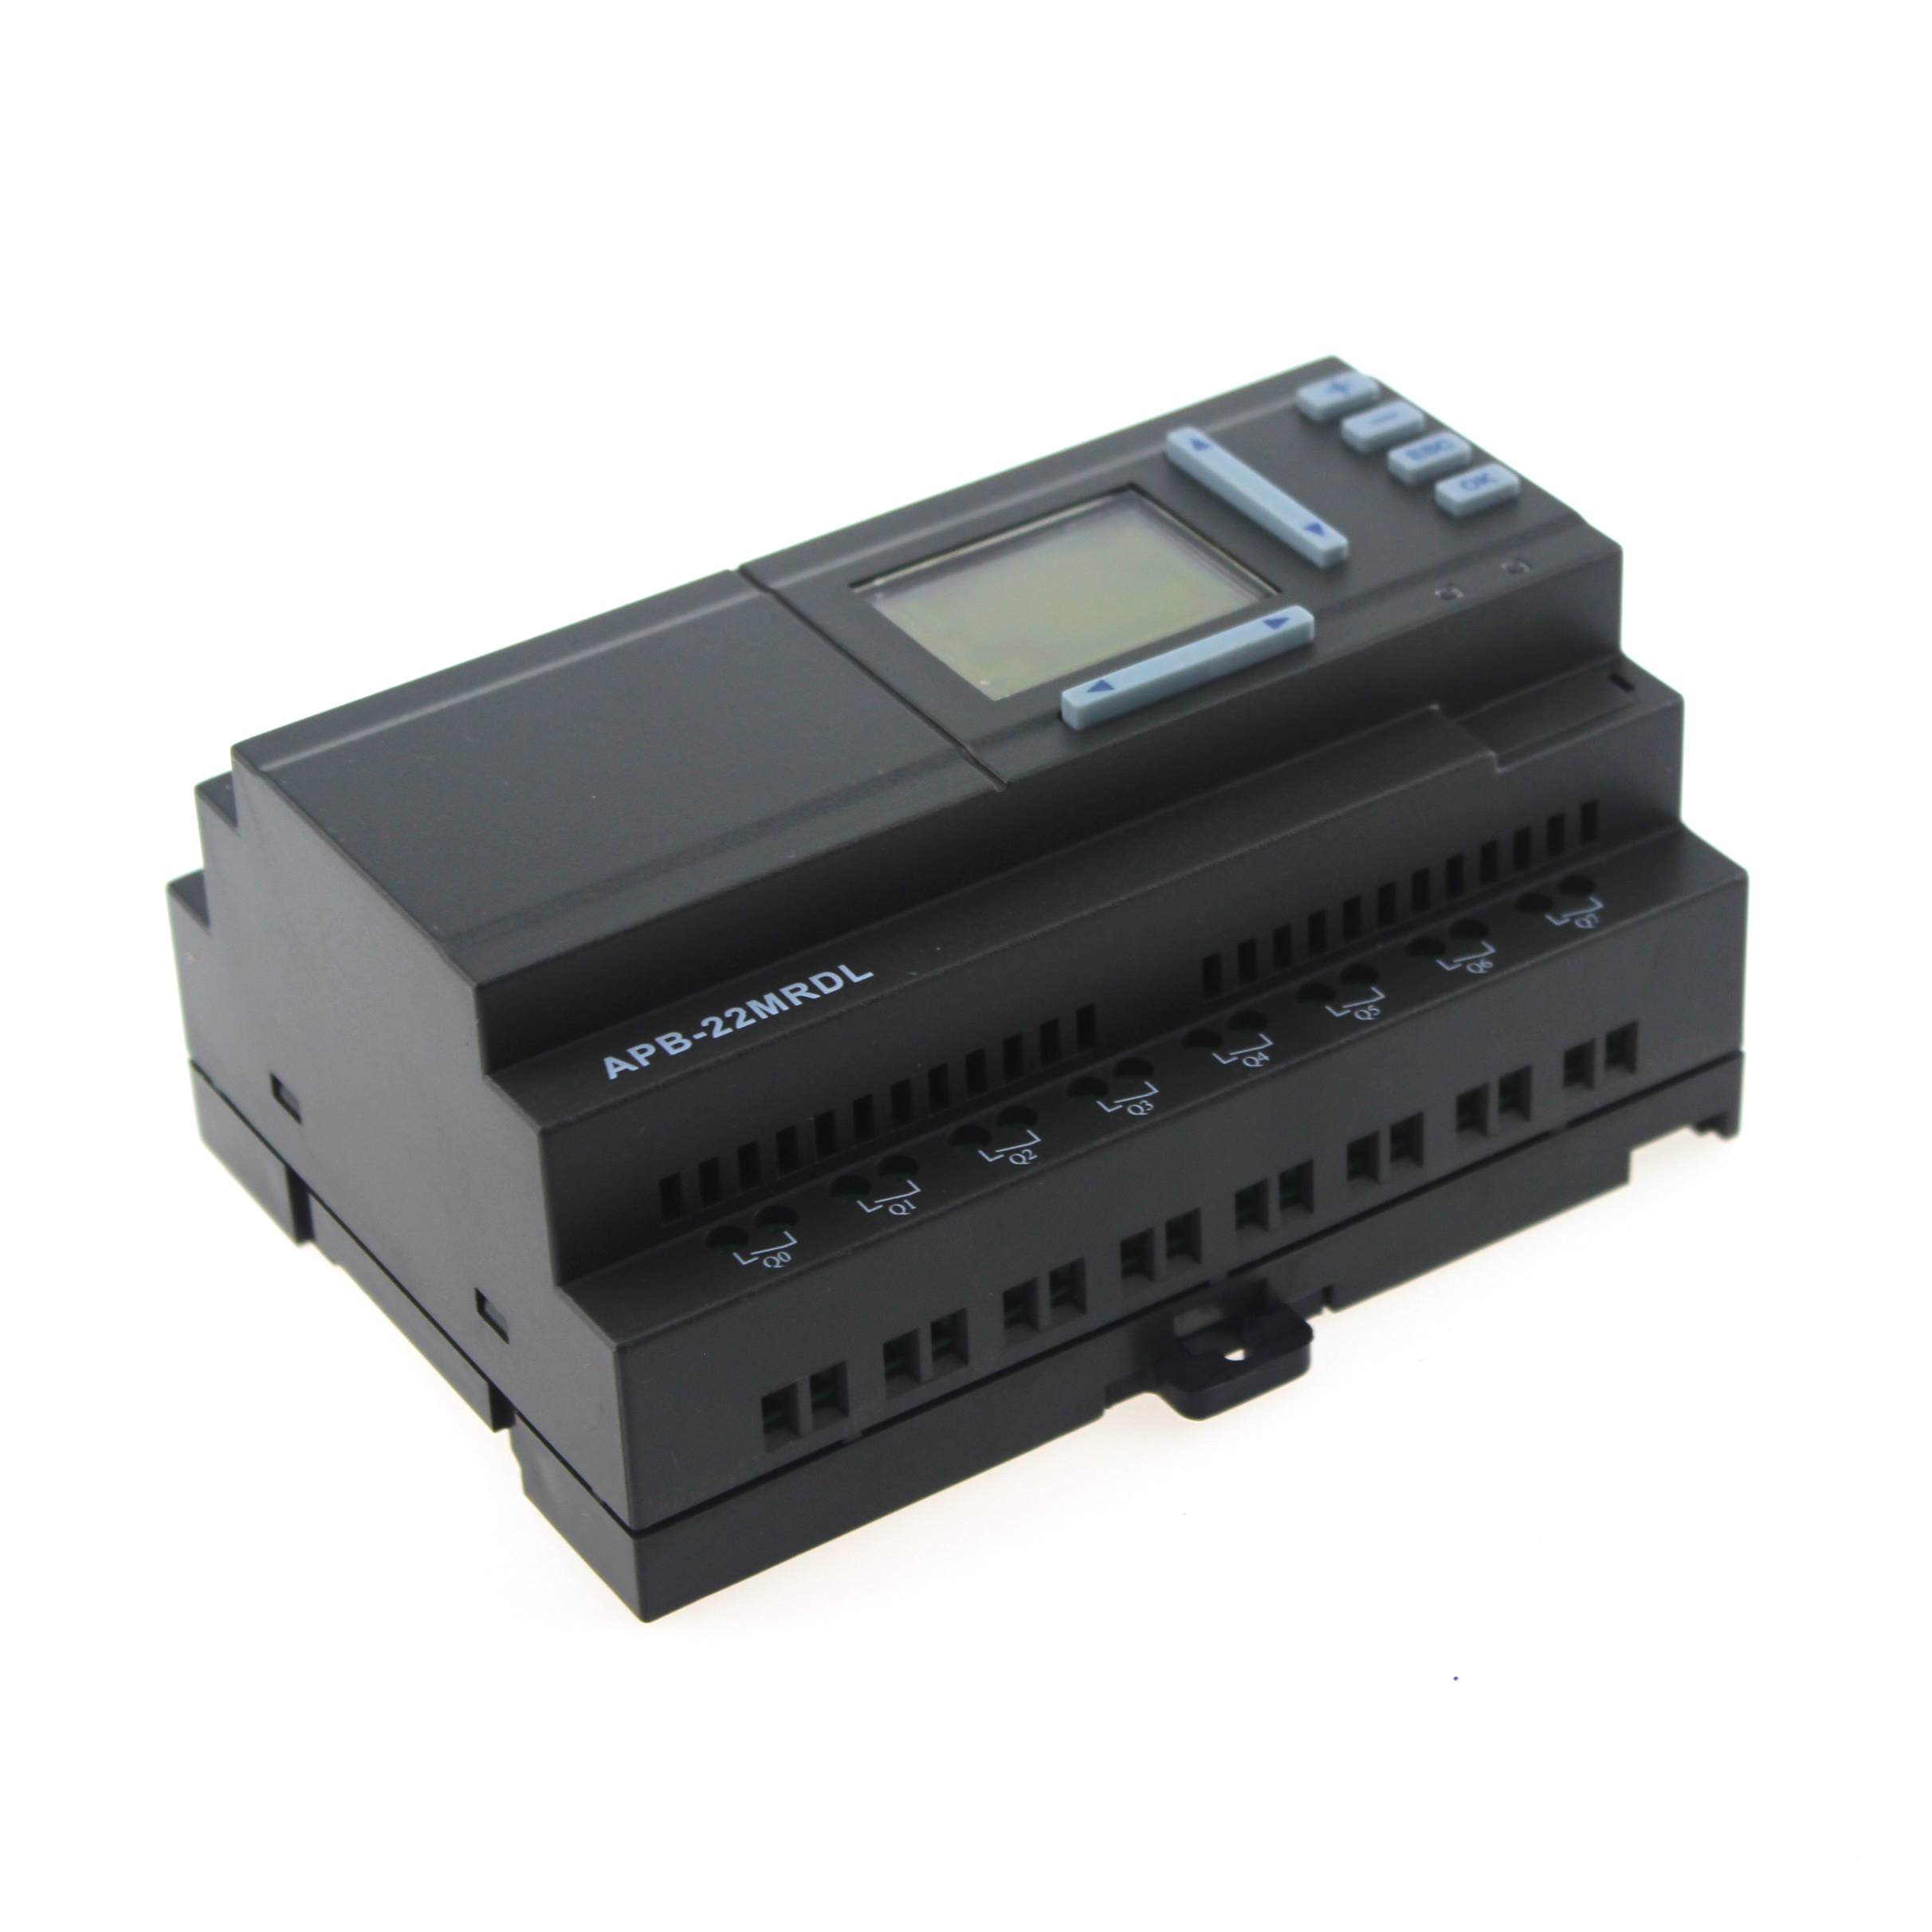 APB-22MRDL APB Series Programmable Logic Controller PLC with LCD